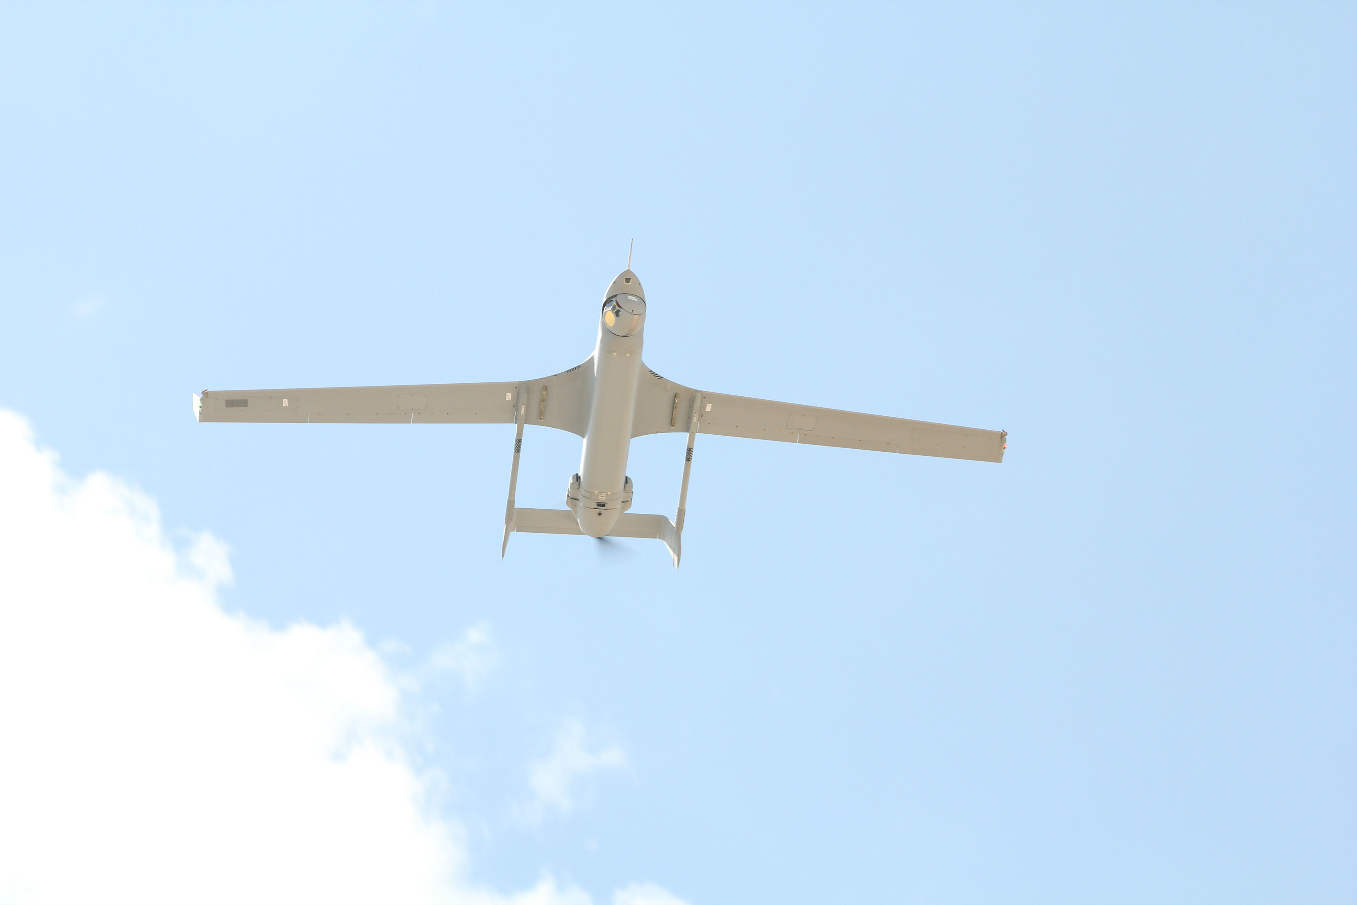 Boeing tests autonomous flight technology in Australia